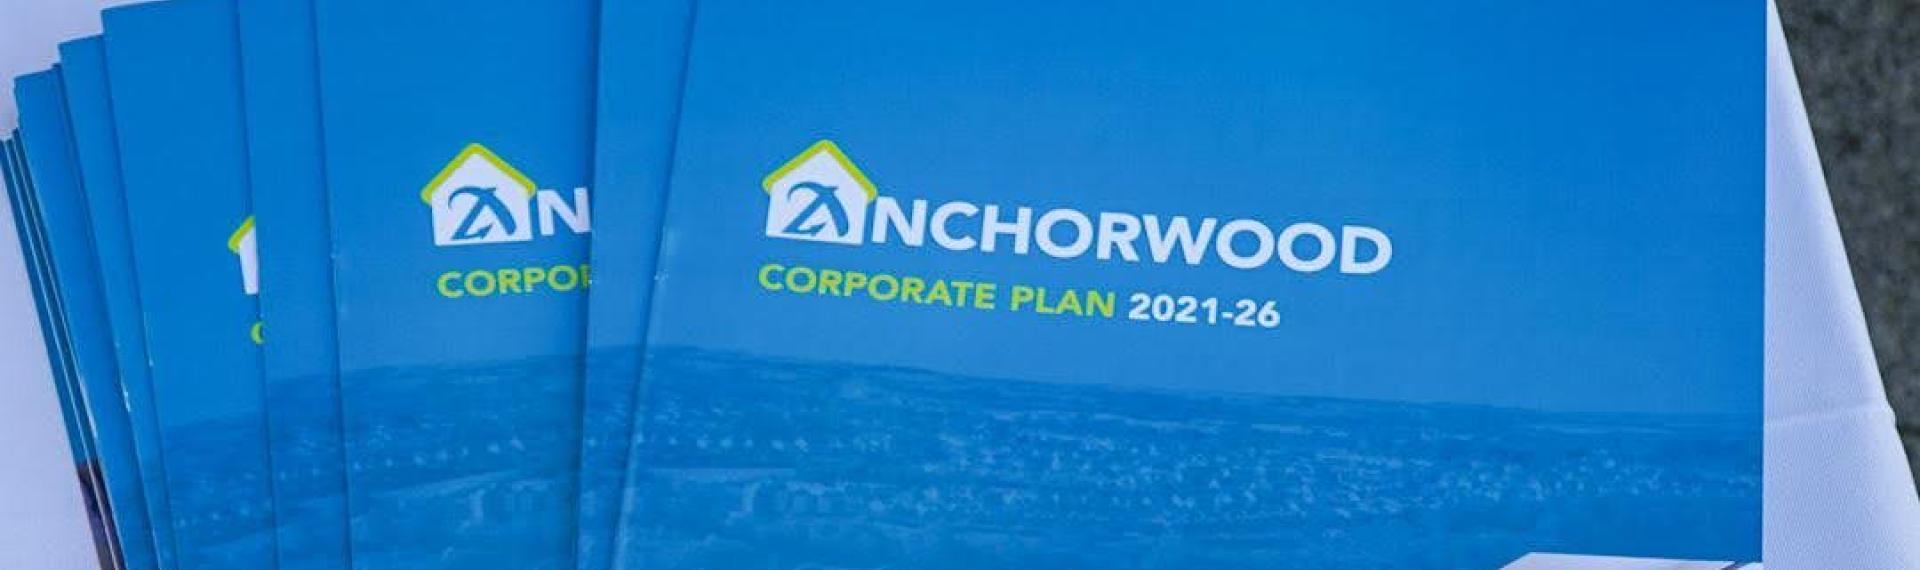 Anchorwood Ltd Corporate Plan